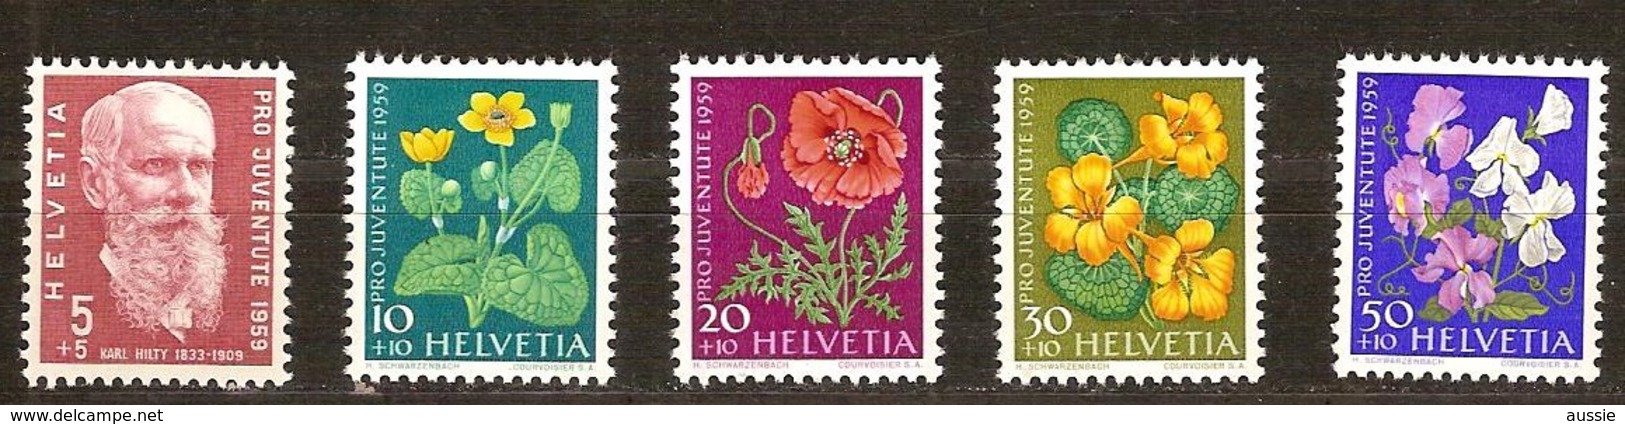 Zwitserland Suisse 1959 Yvertnr. 634-638 *** MNH Cote 5,50 Euro Flore Bloemen Fleurs - Nuevos